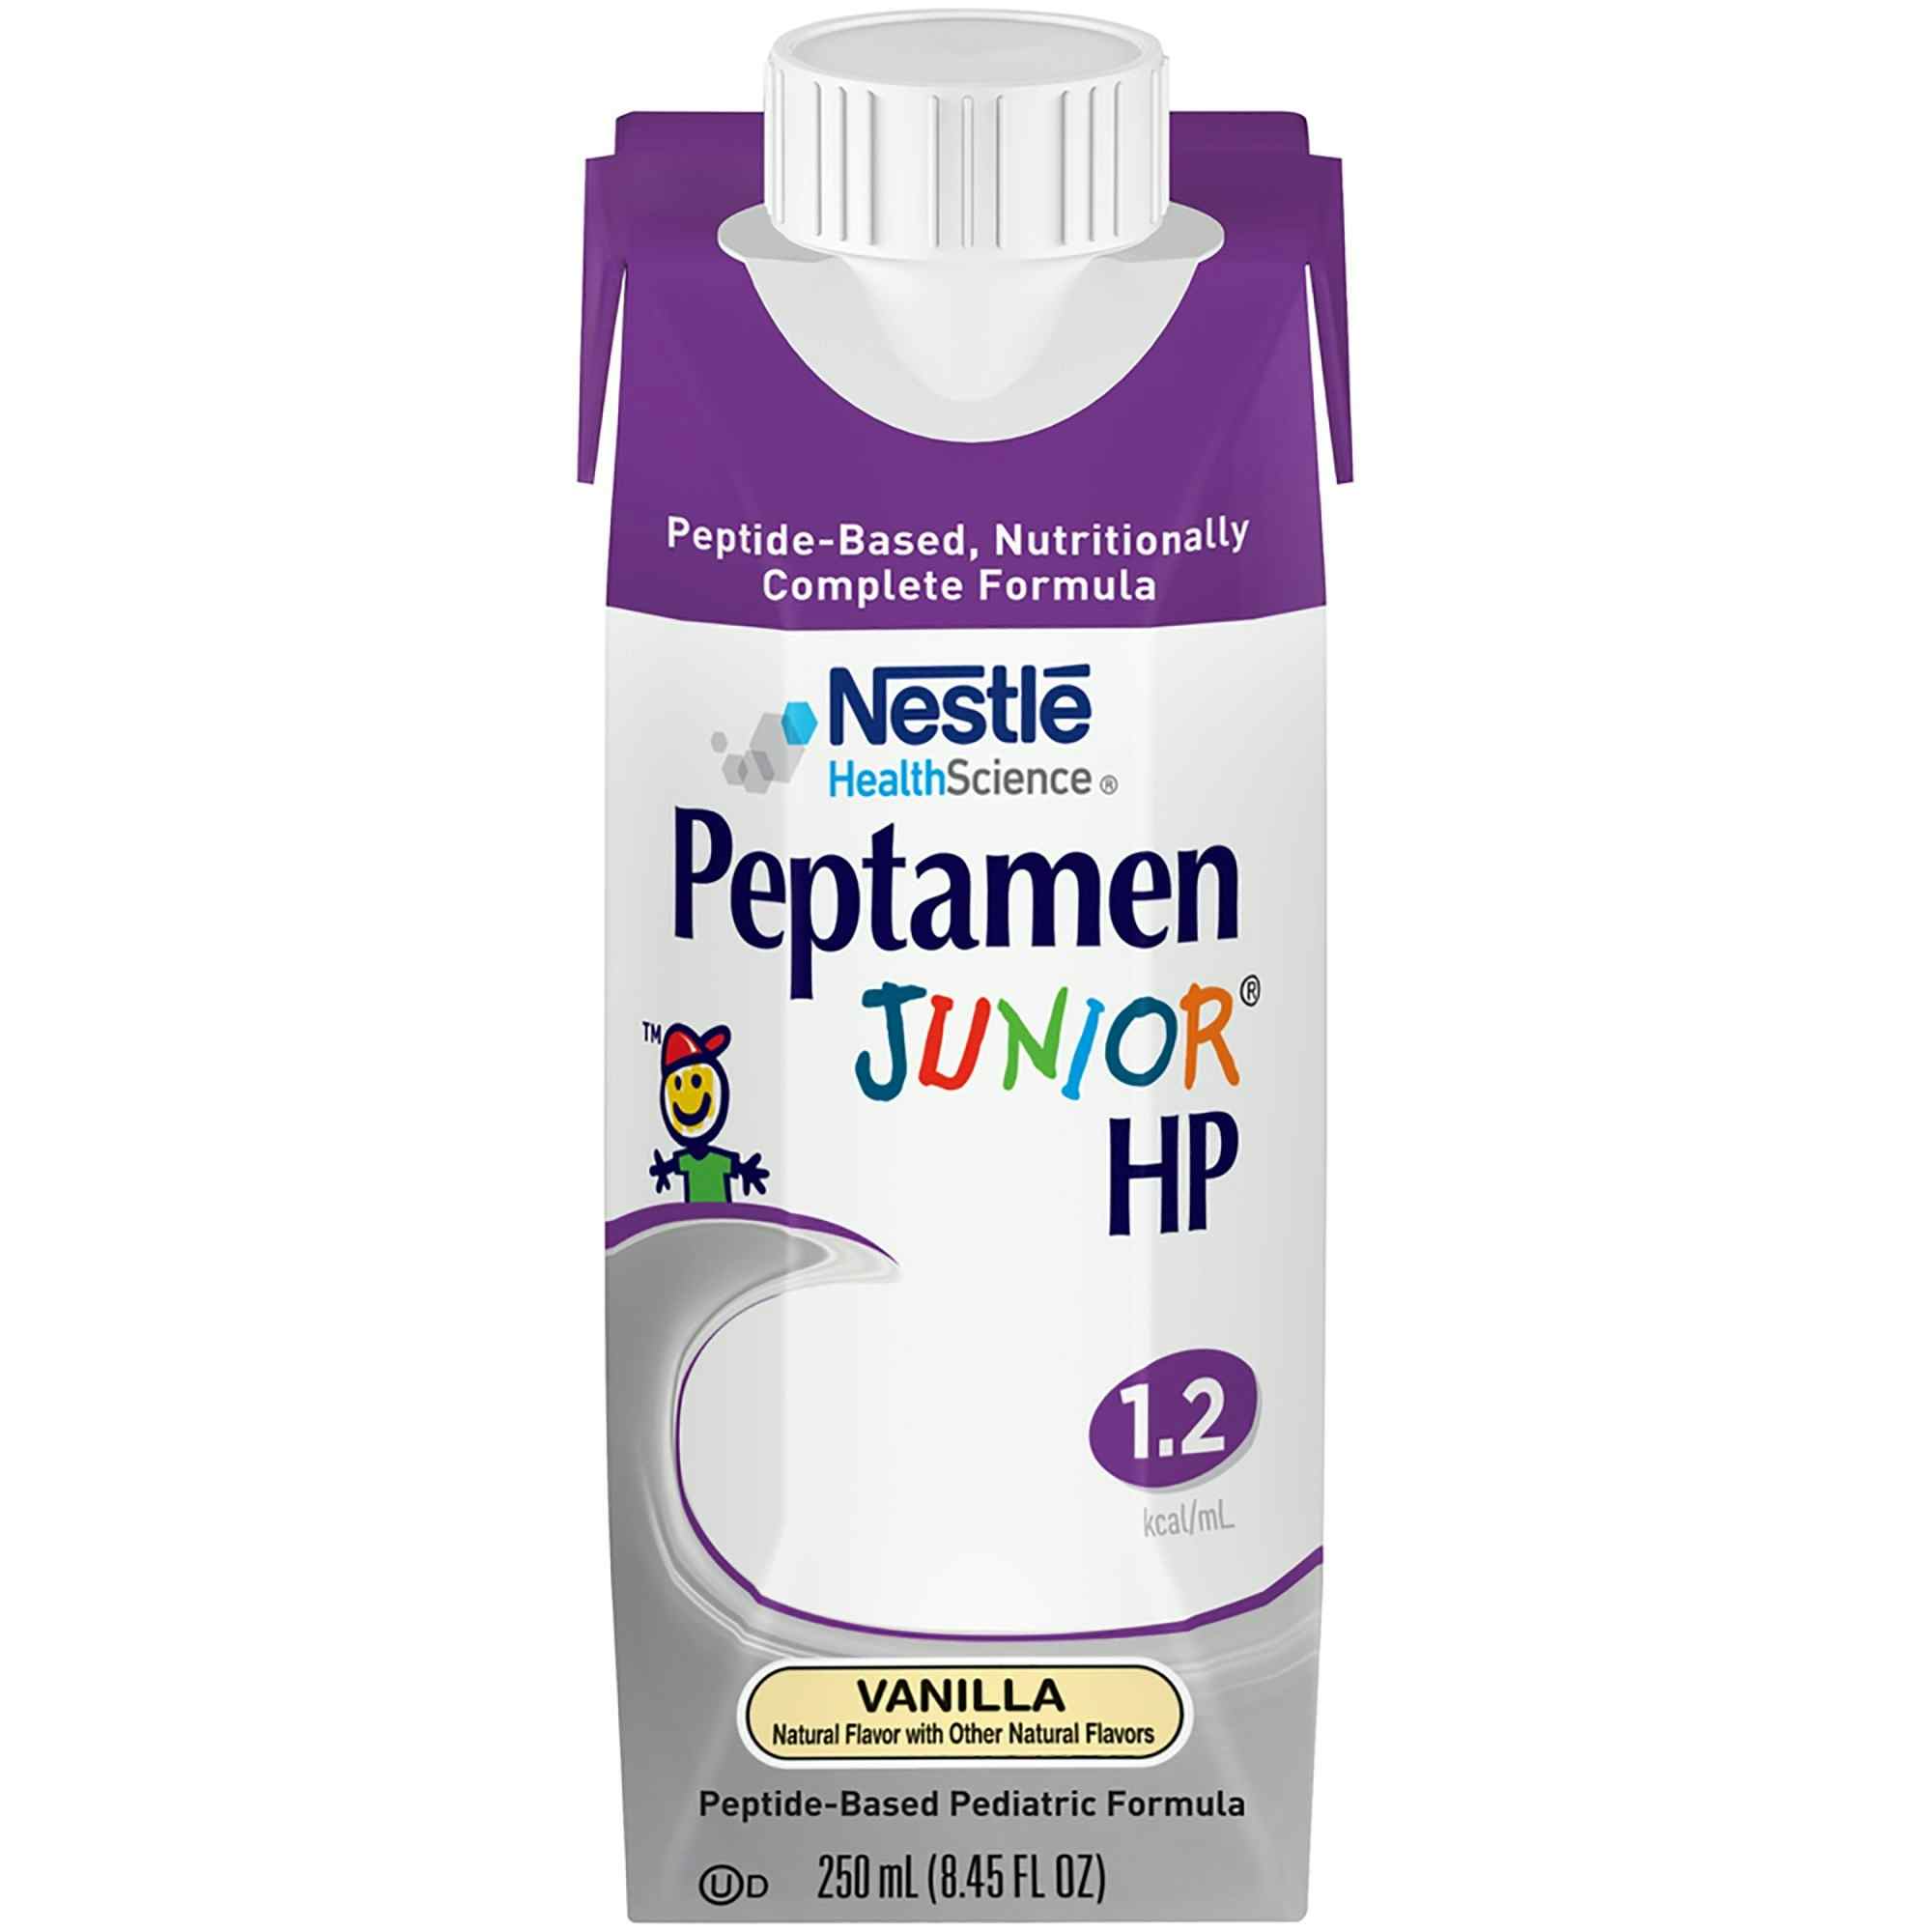 Nestle HealthScience Peptamen Junior HP Peptide-Based Nutritionally Complete Formula, Vanilla, 8.45 oz., 00043900544588, 1 Each